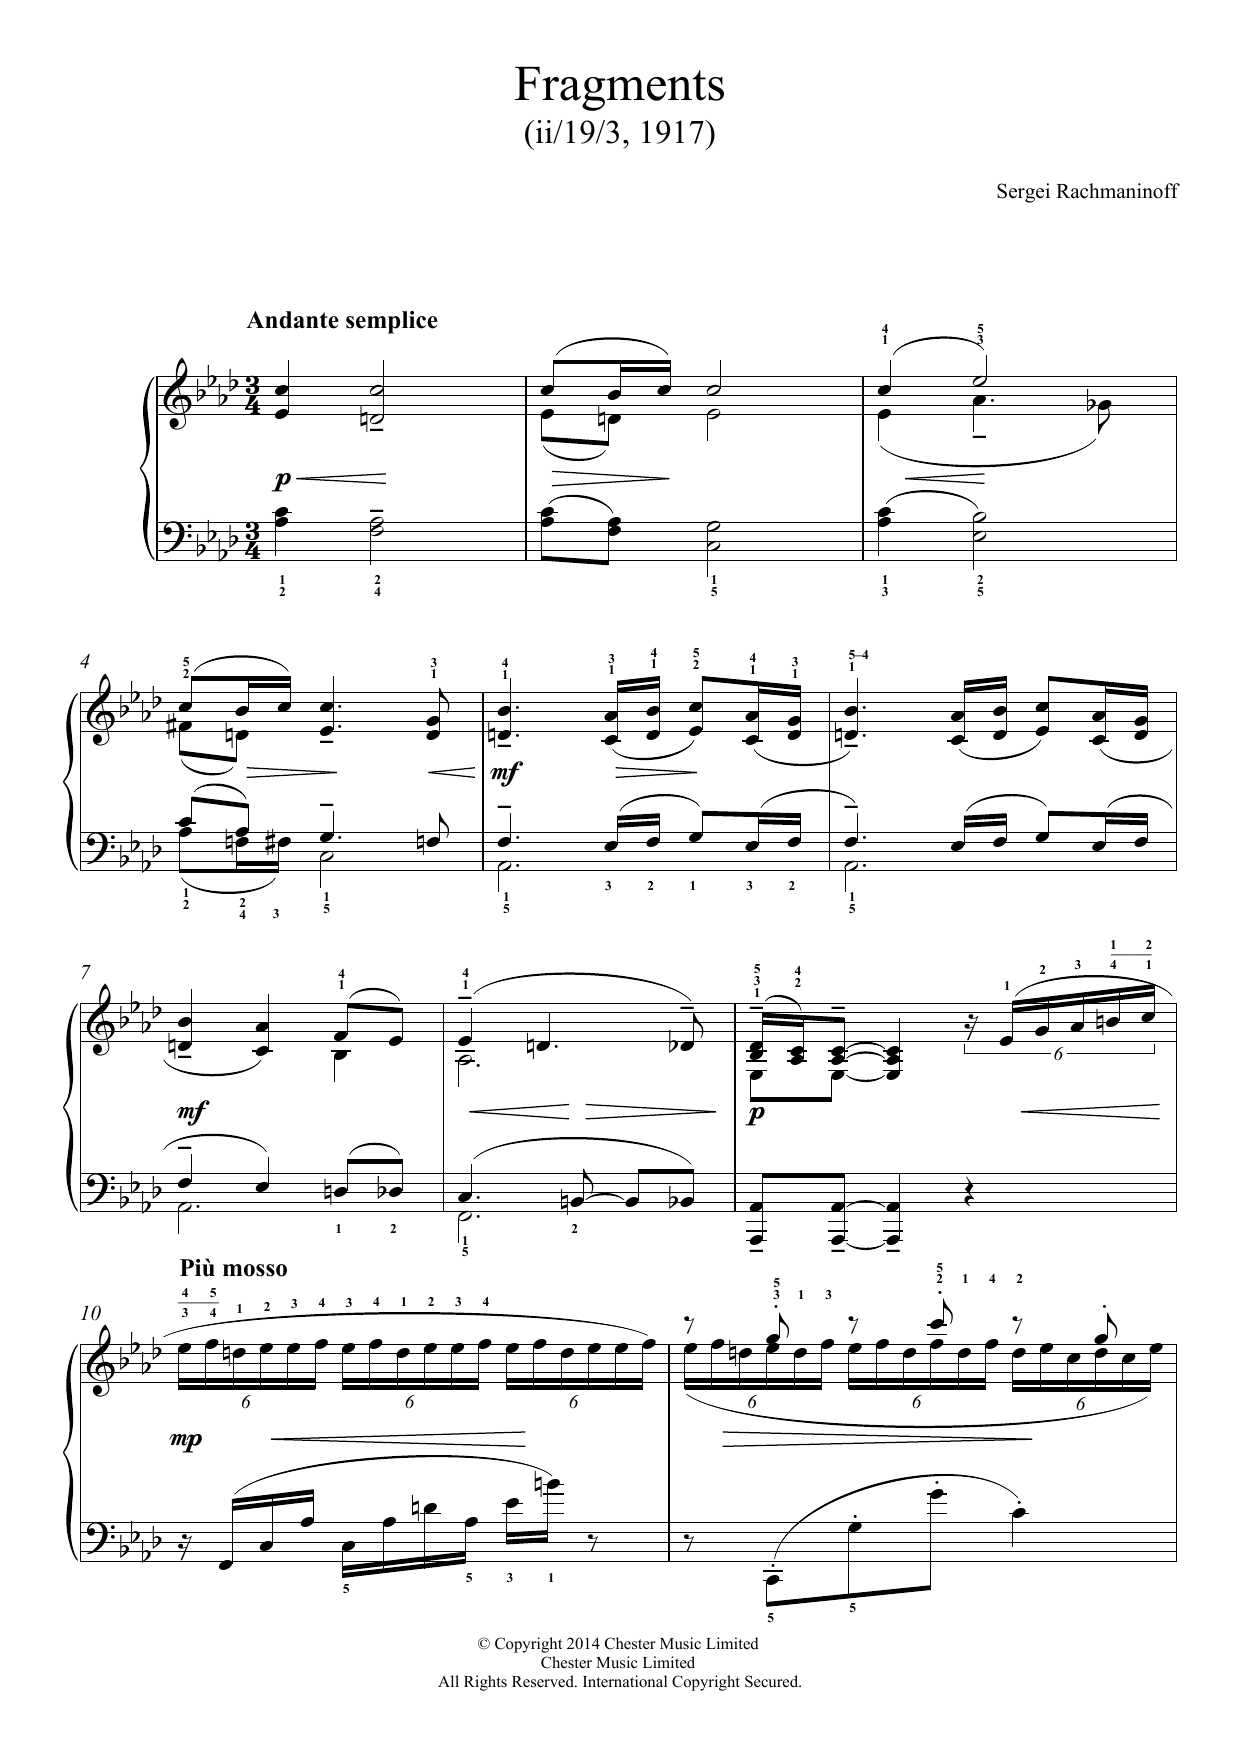 Download Sergei Rachmaninoff Fragments (1917) Sheet Music